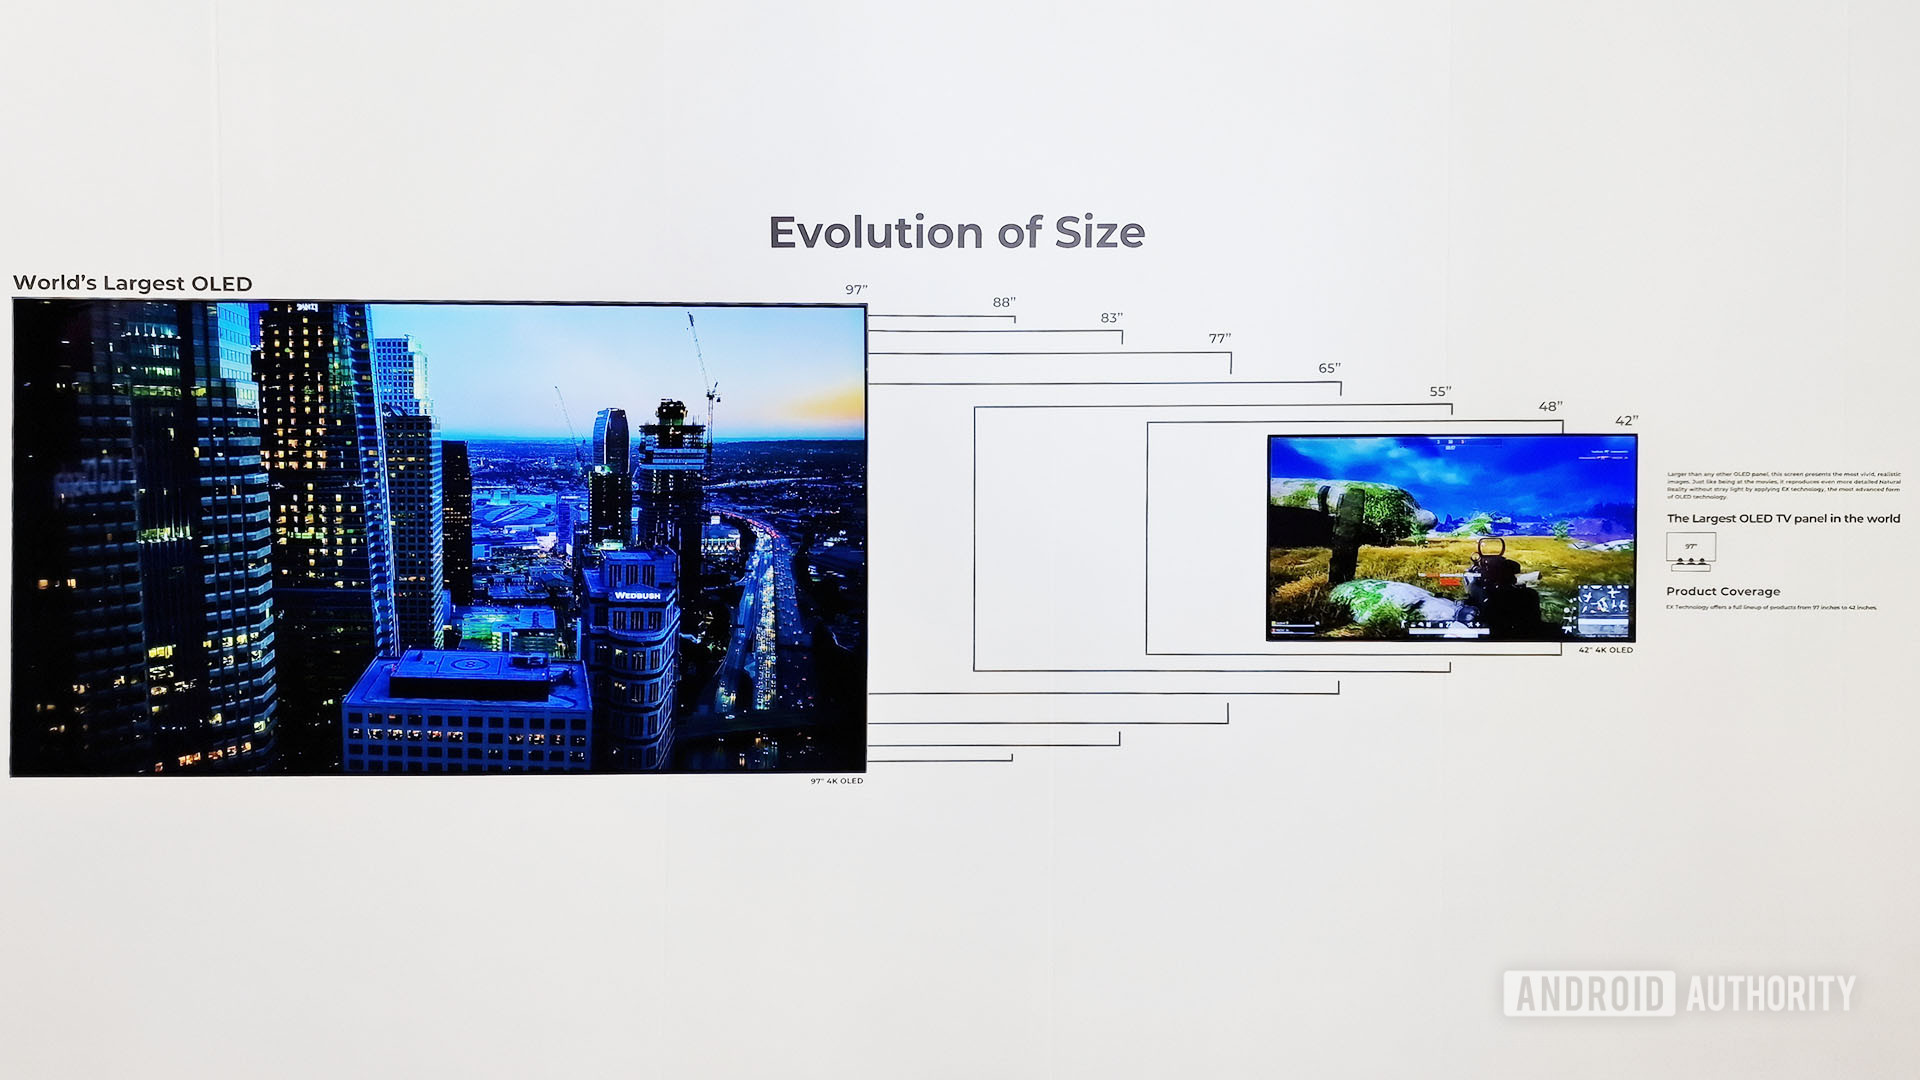 LG Display Evolution of OLED size